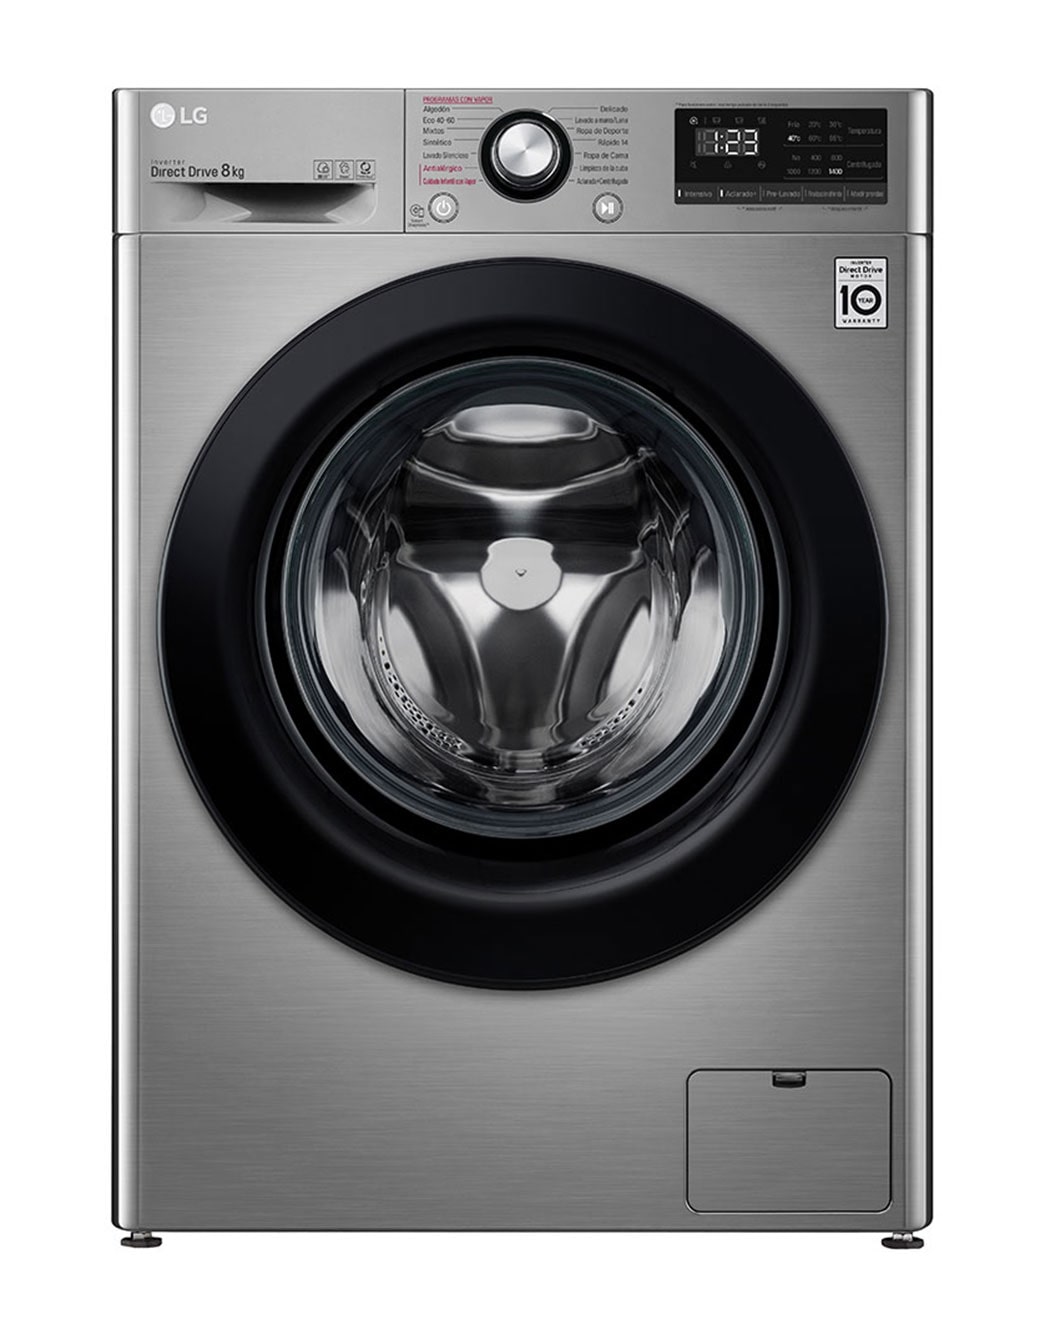 LG Lavadora inteligente AI Direct Drive 8kg, 1400rpm, Clasificación C, Inox Serie 300 | LG España